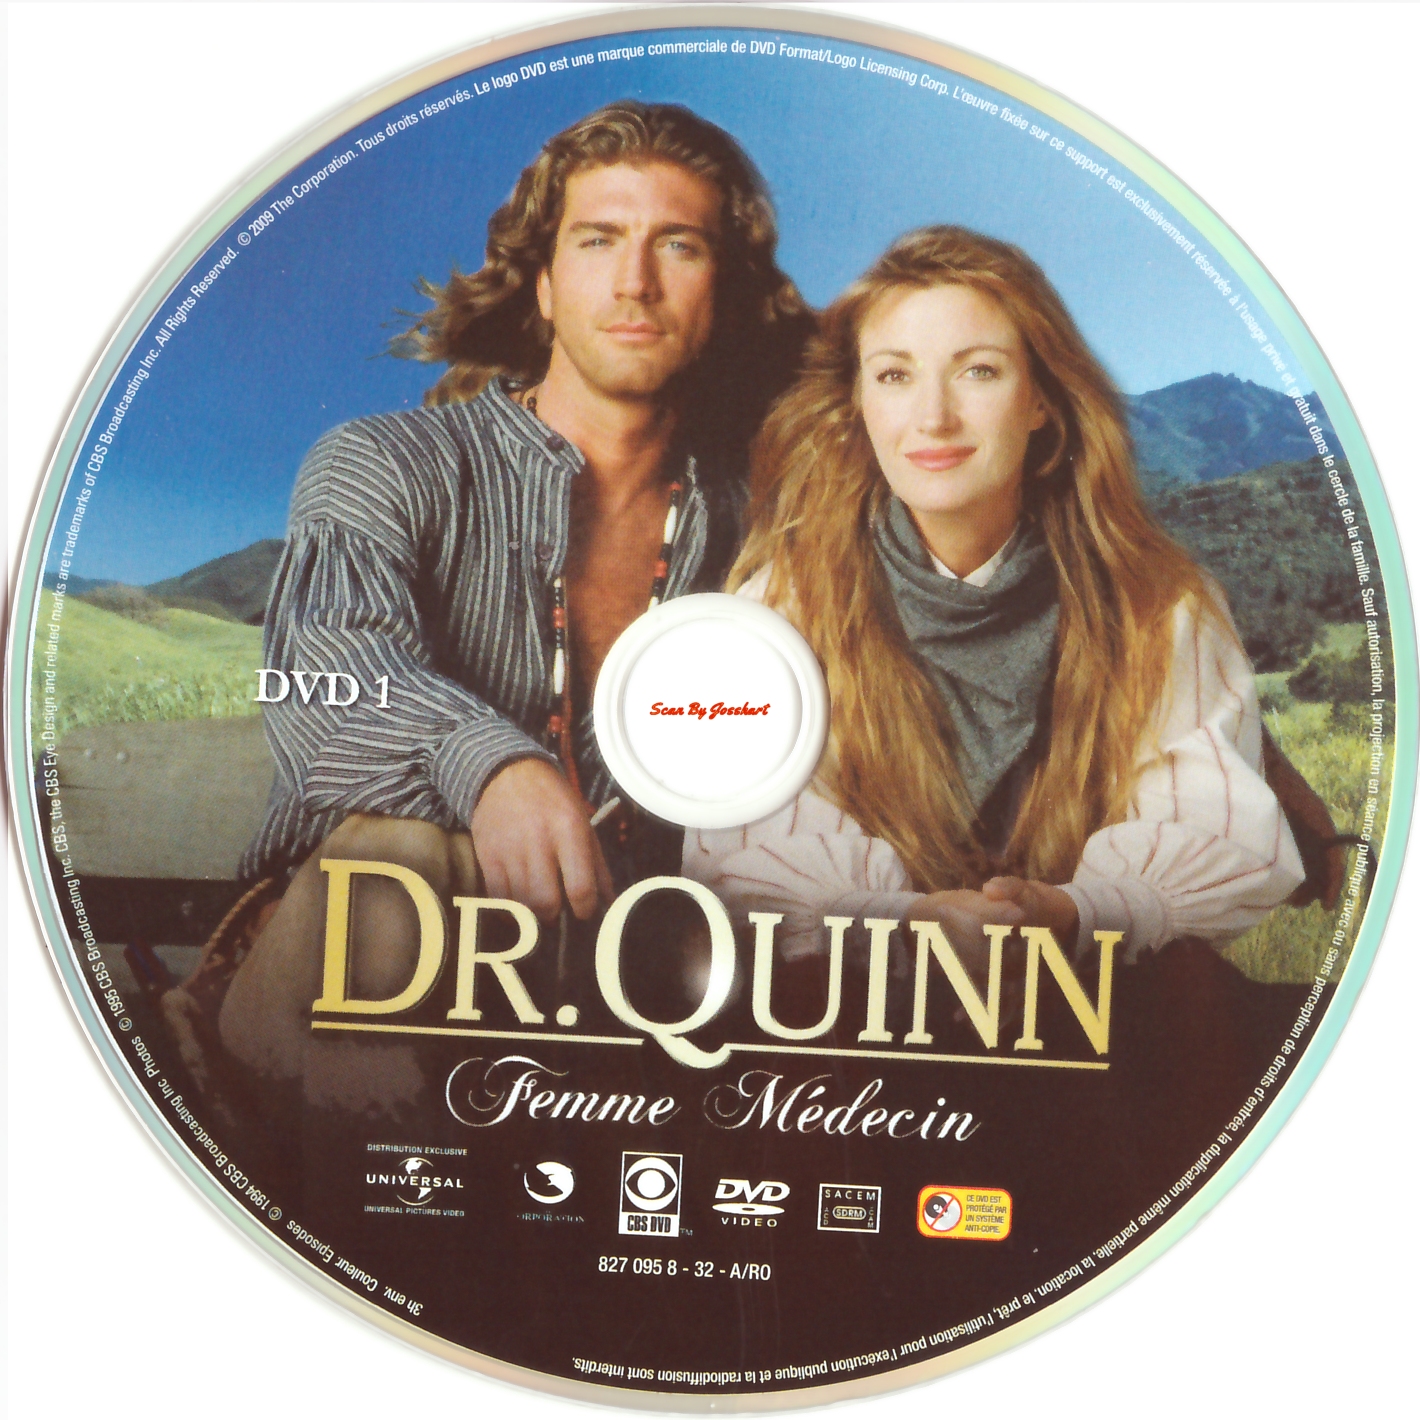 Docteur Quinn femme mdecin - Integrale Saison 3 DISC 1